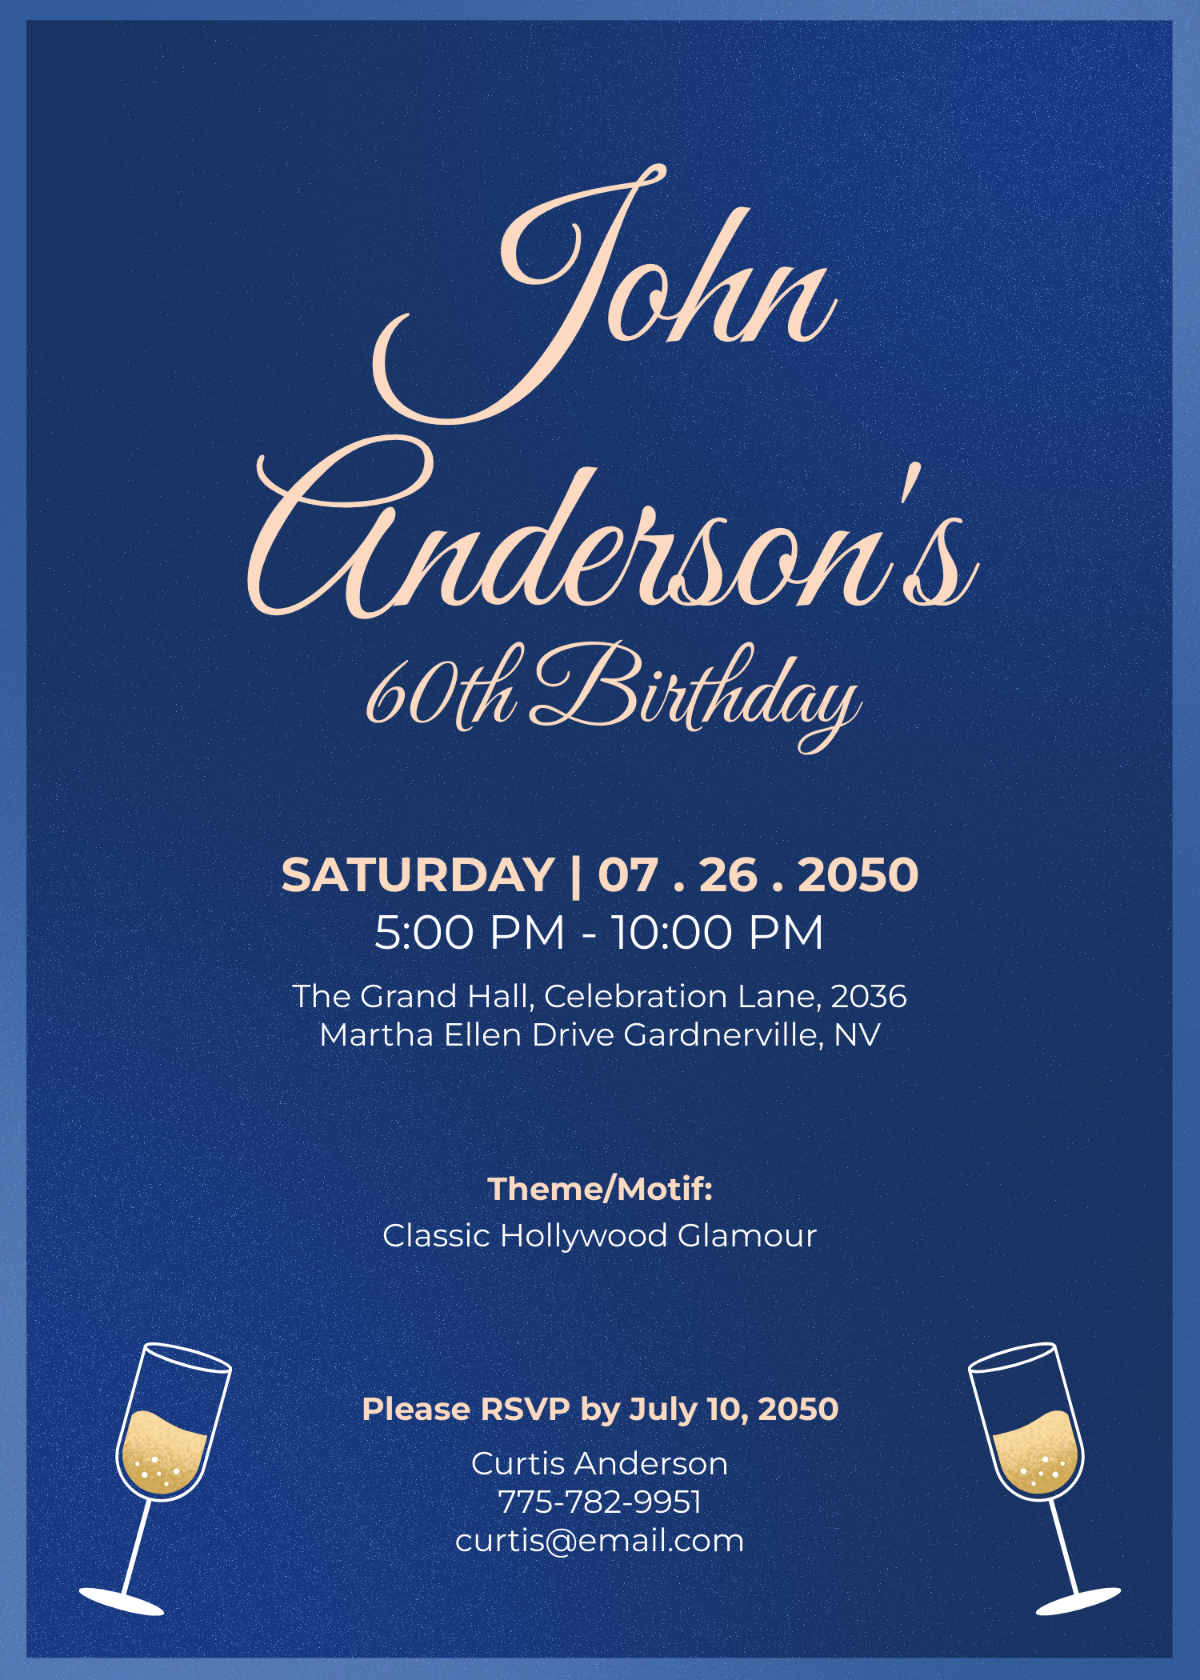 Dad's 60th Birthday Invitation